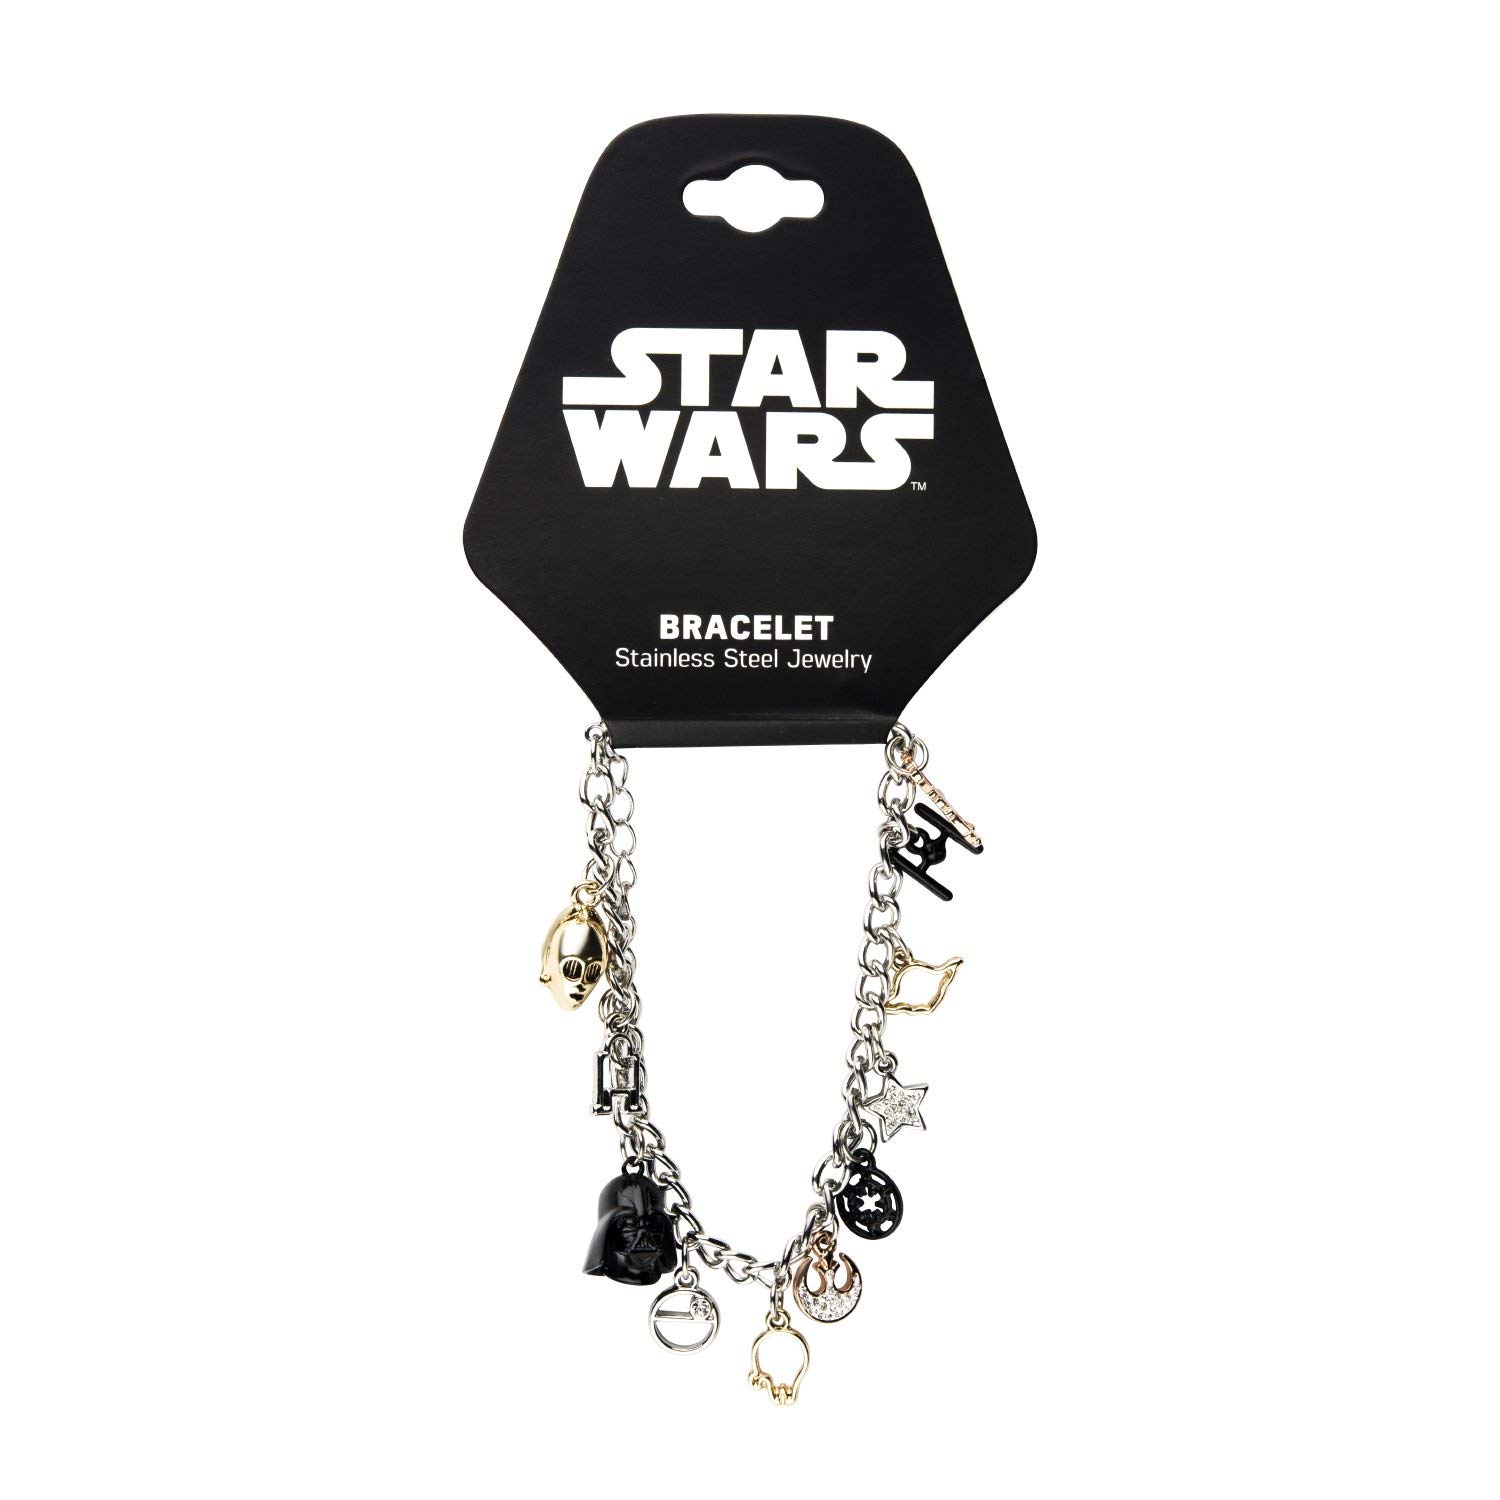 Star Wars Multi Charm Bracelet on Amazon